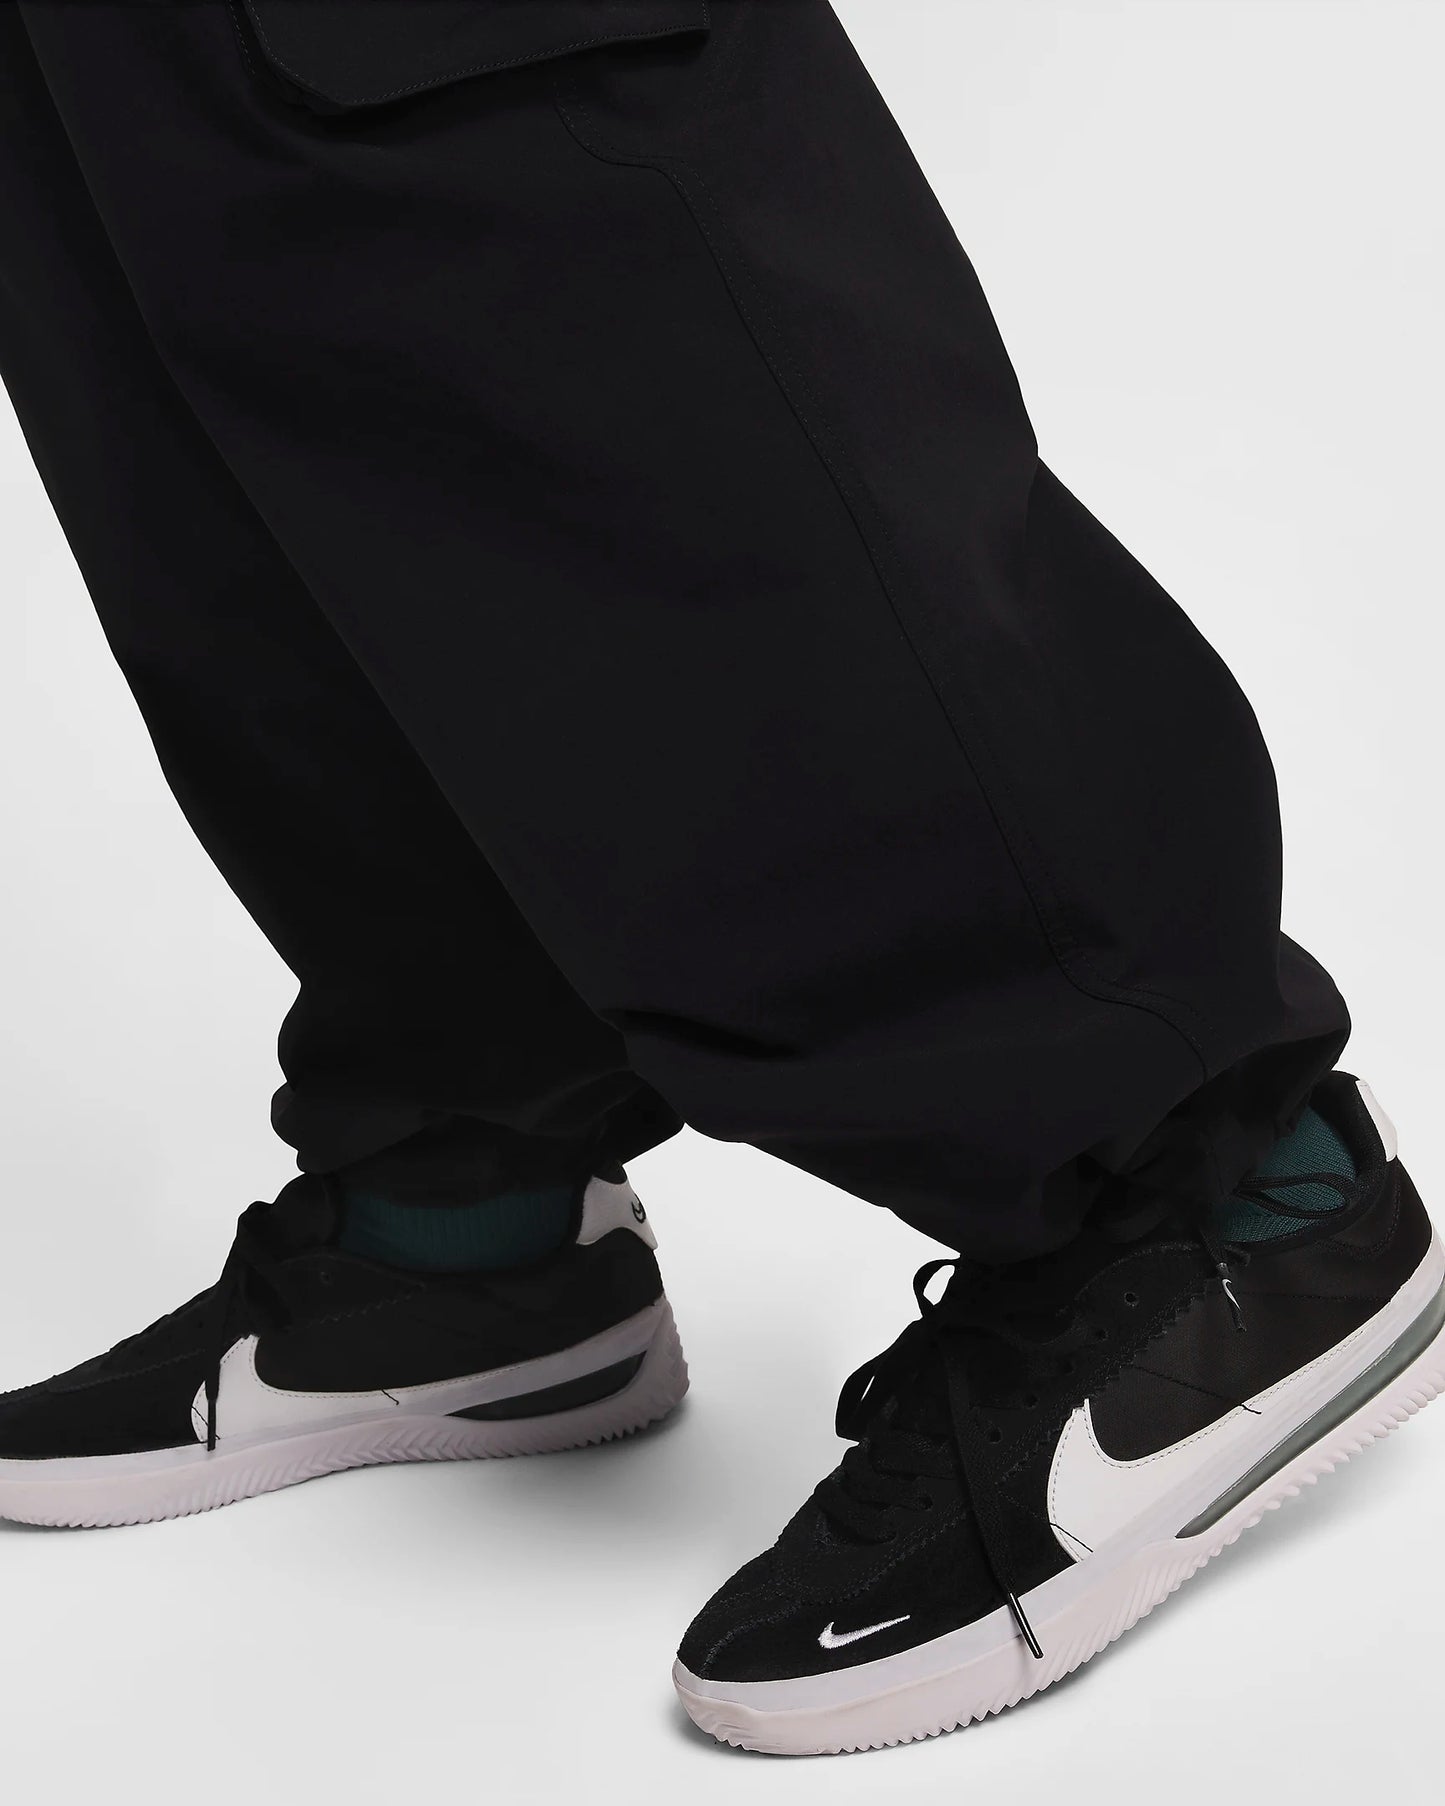 Nike SB Dri-Fit Kearny Skate Cargo Pants Black